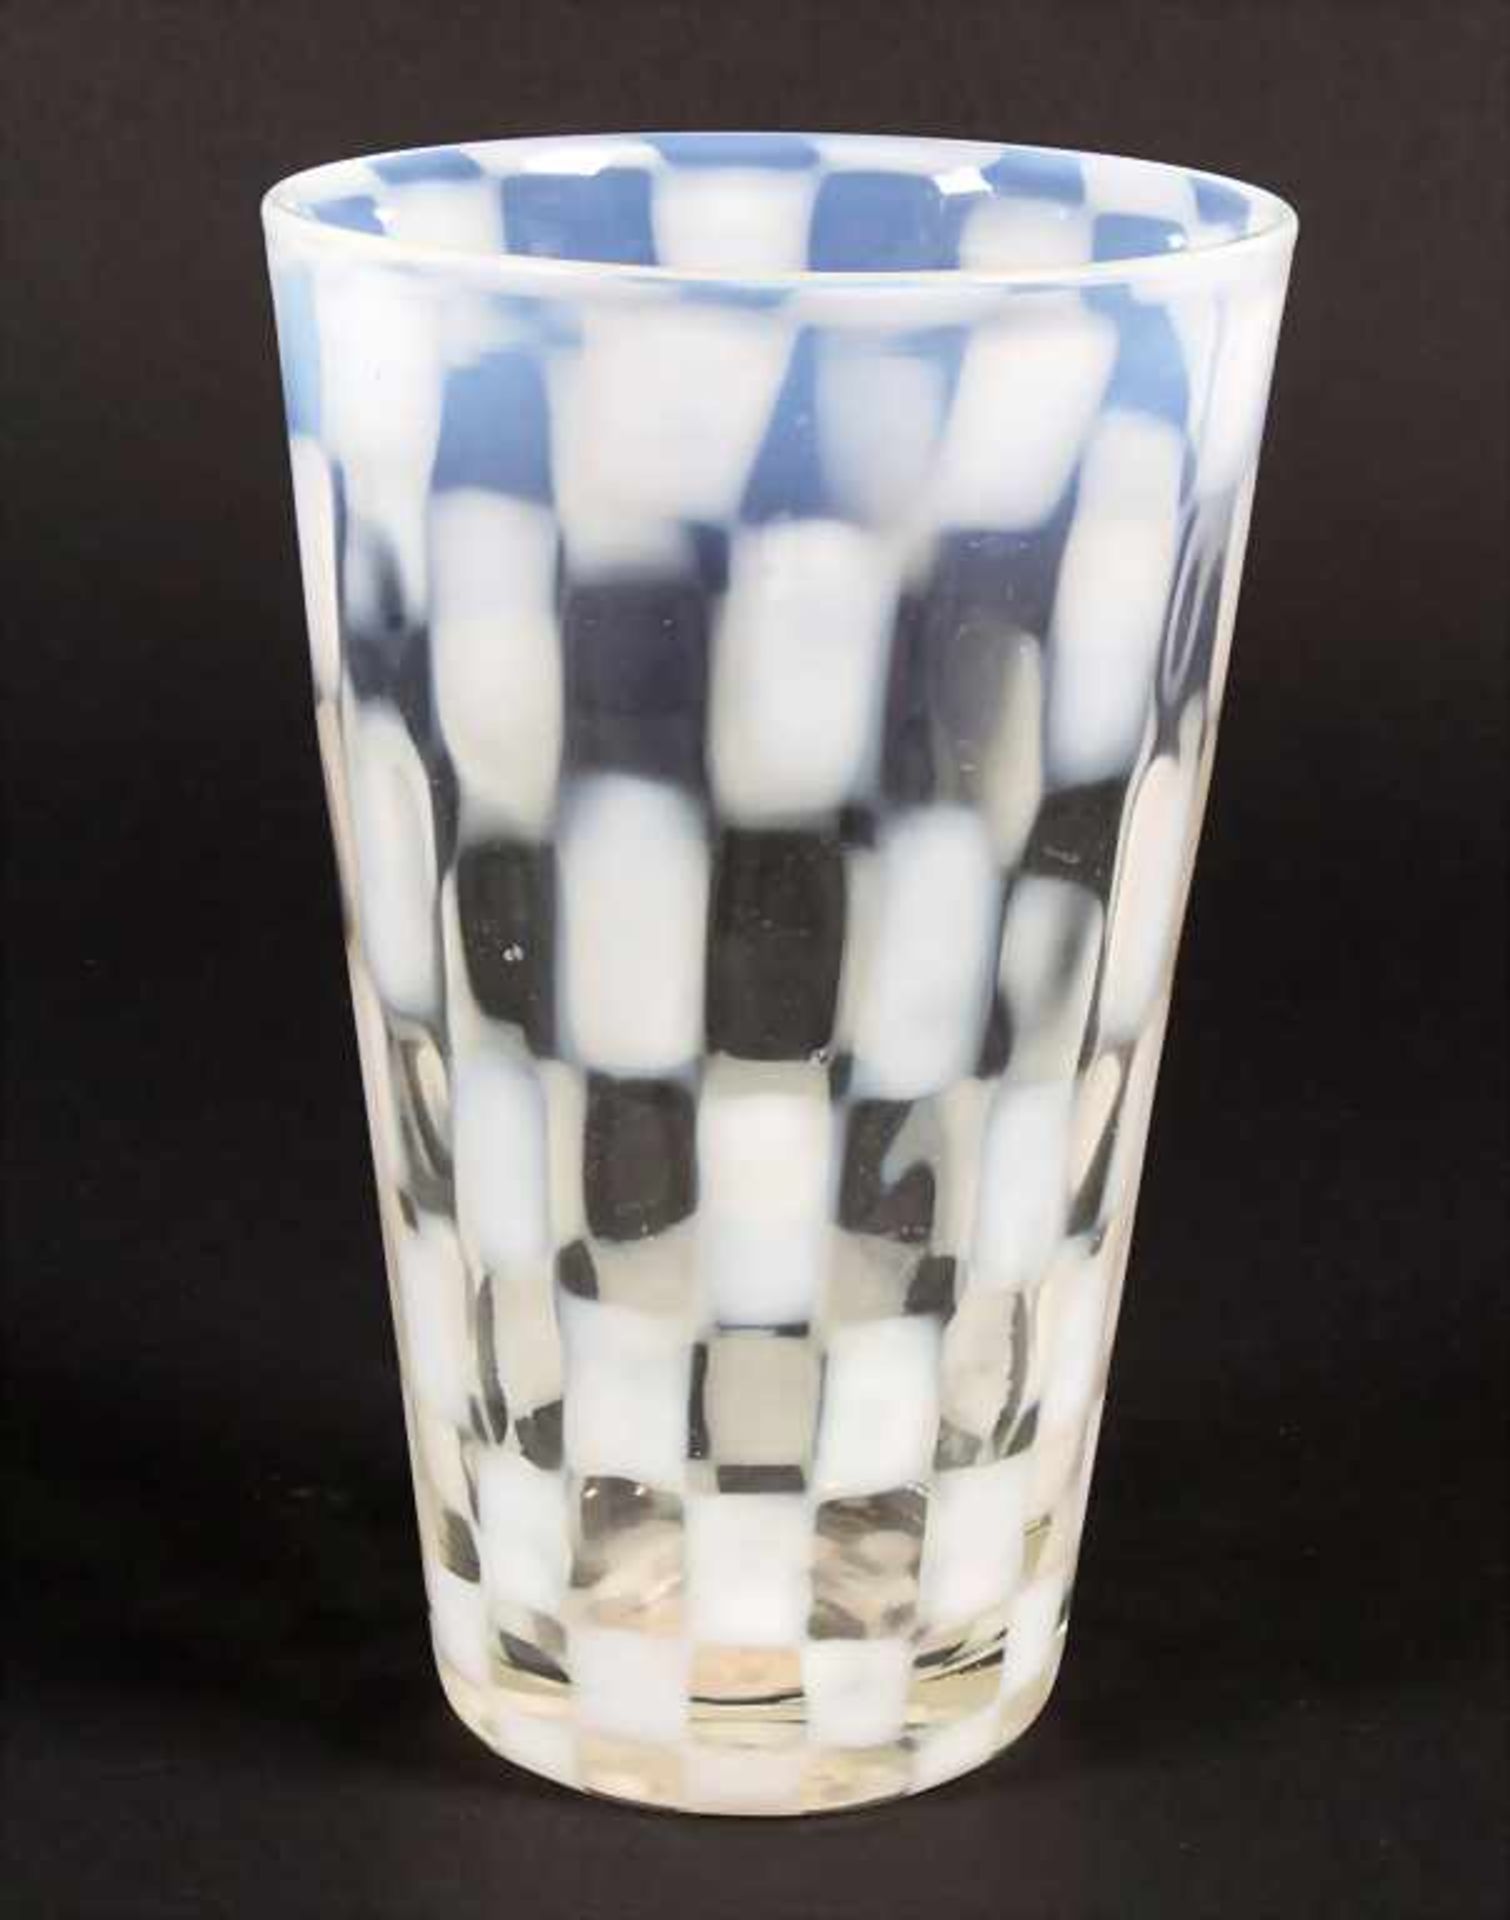 Glasziervase / A decorative glass vase, wohl Brovier & Toso, Murano